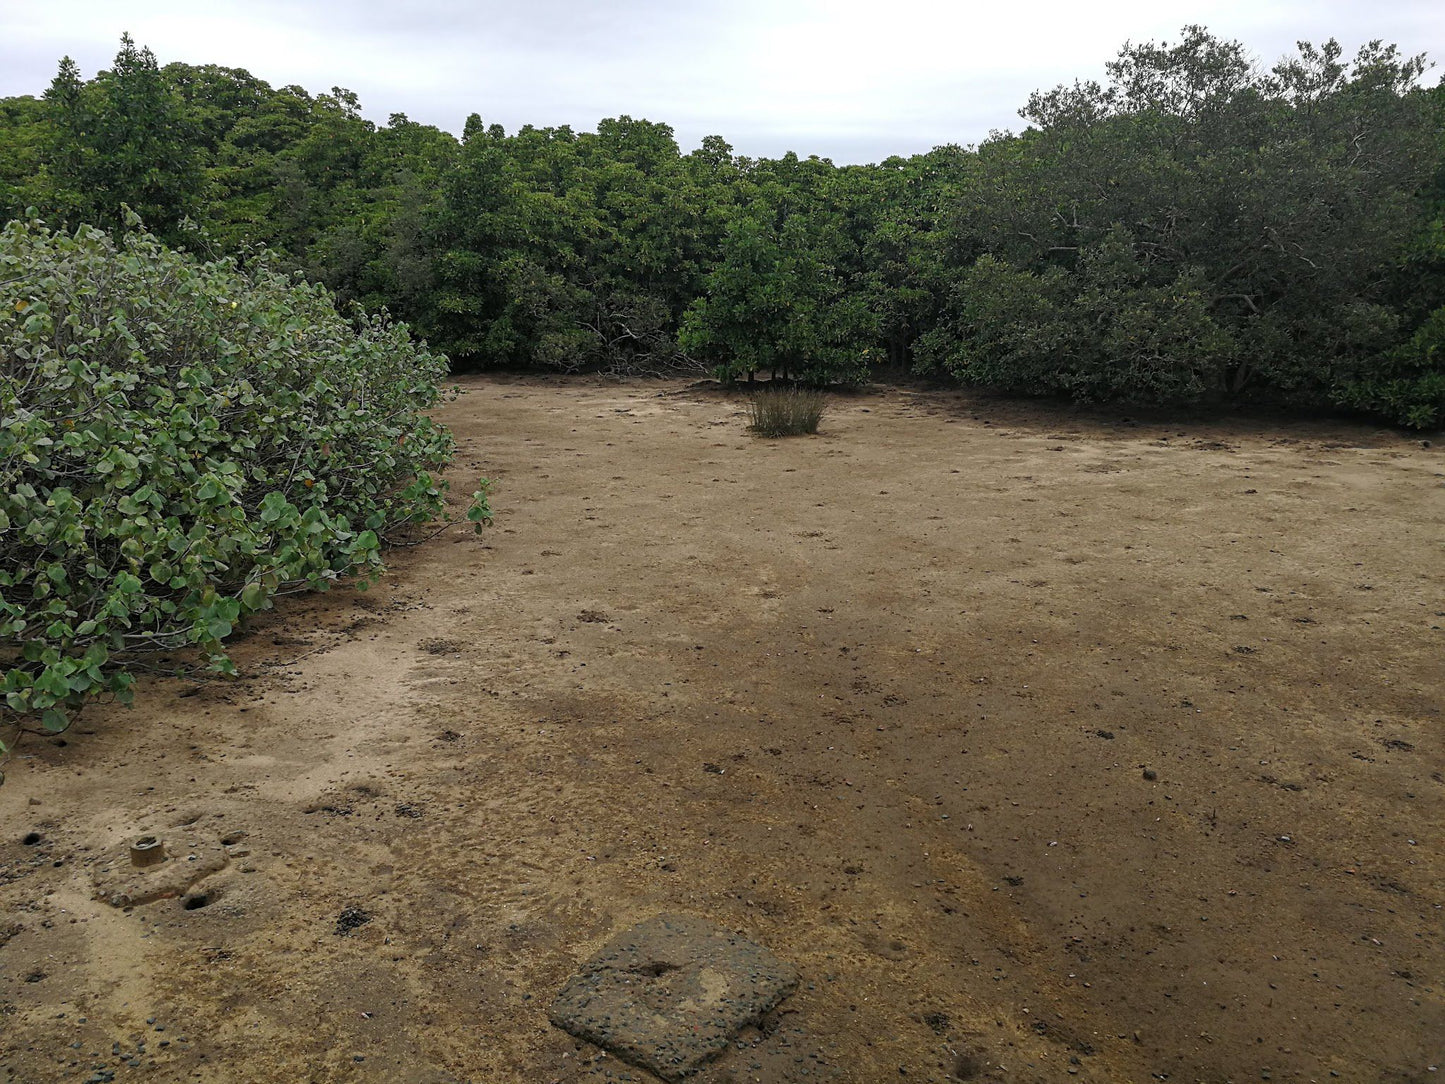  Beachwood Mangroves Nature Reserve